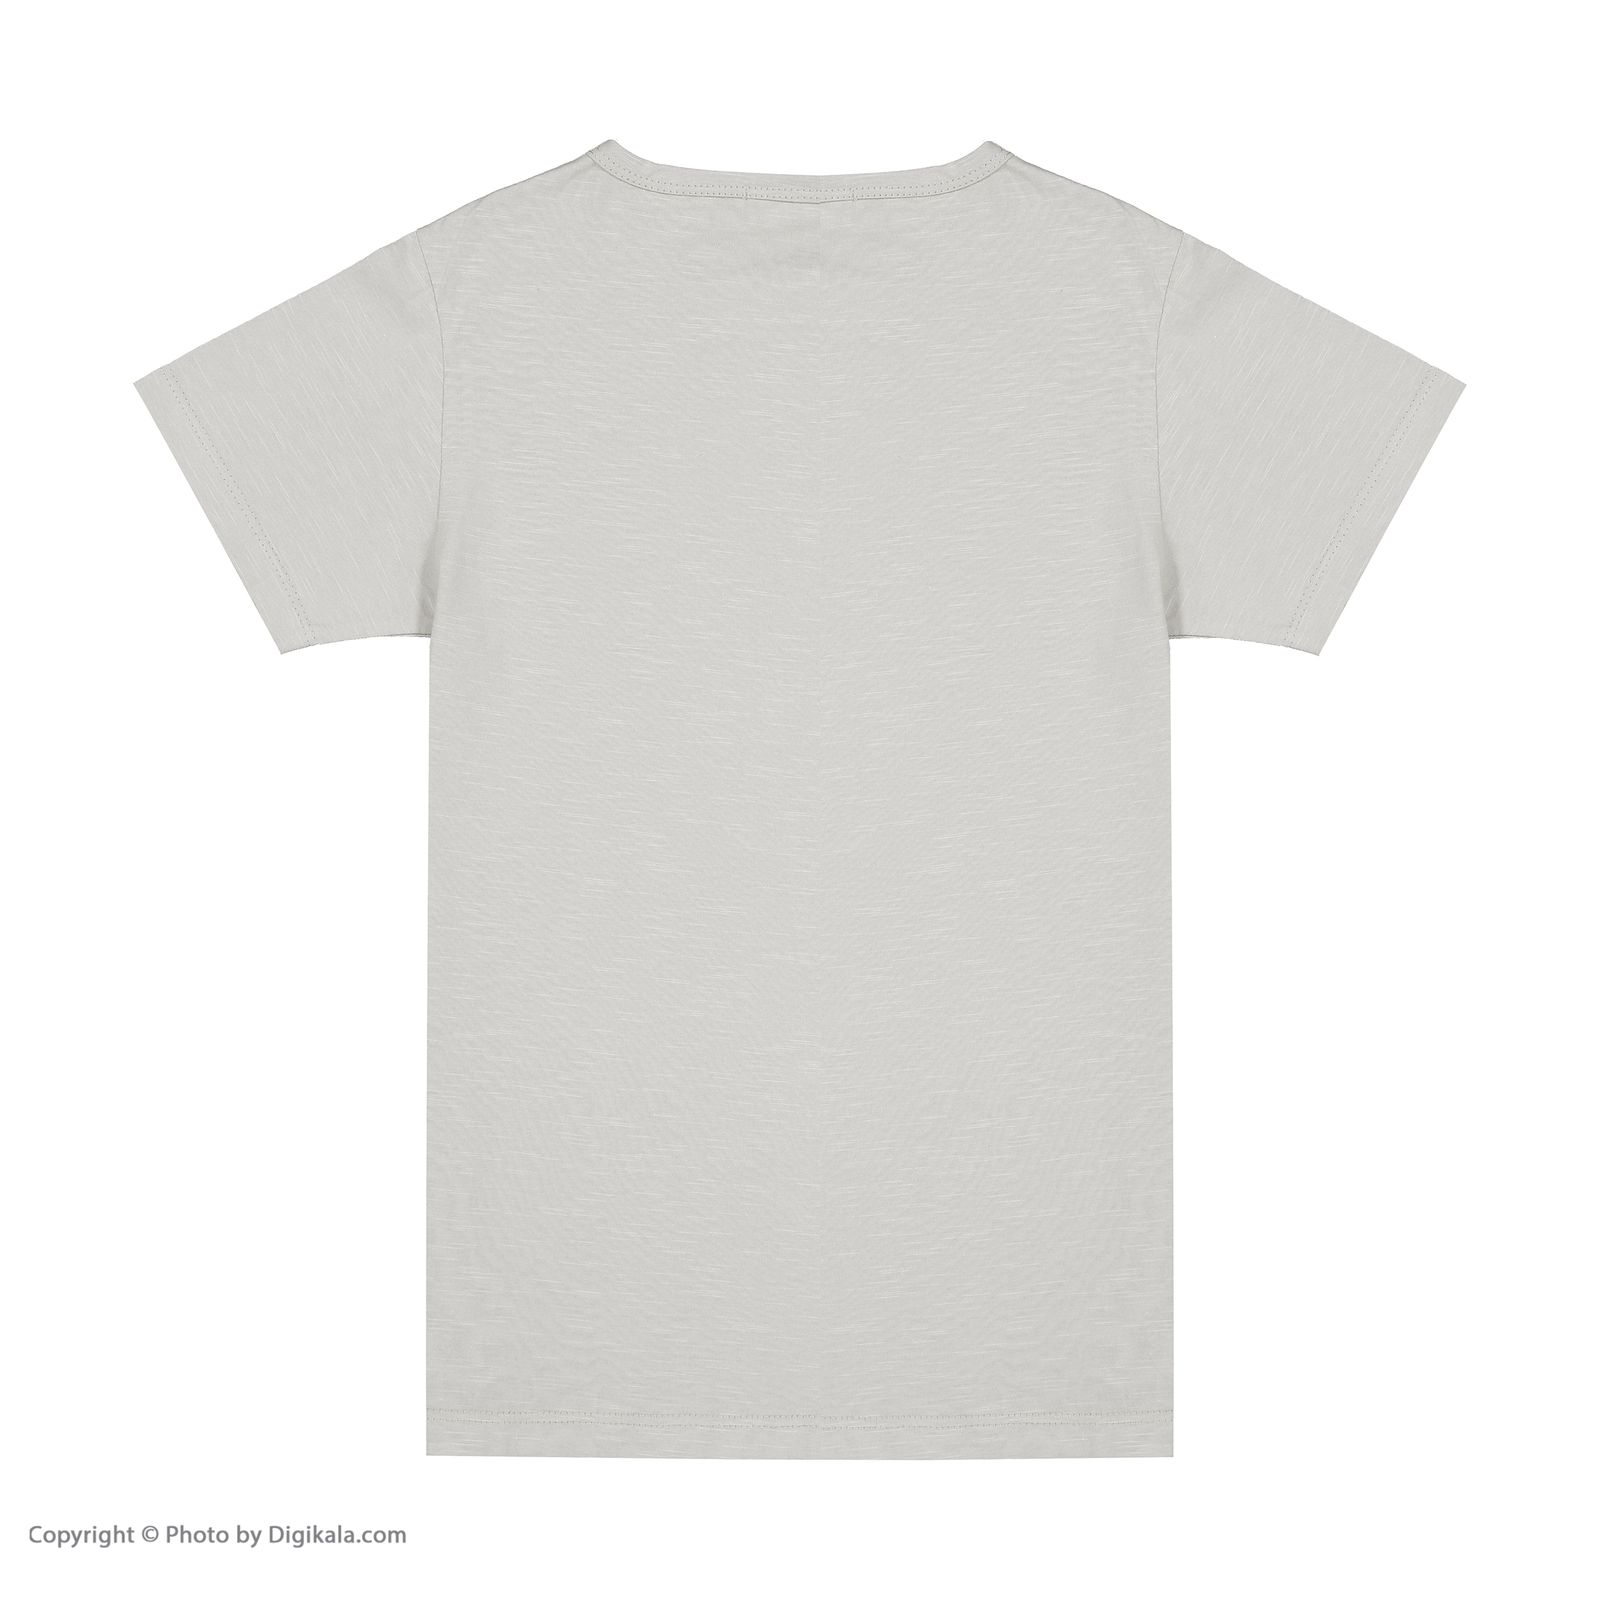 تی شرت پسرانه بی کی مدل 2211125-01 -  - 3